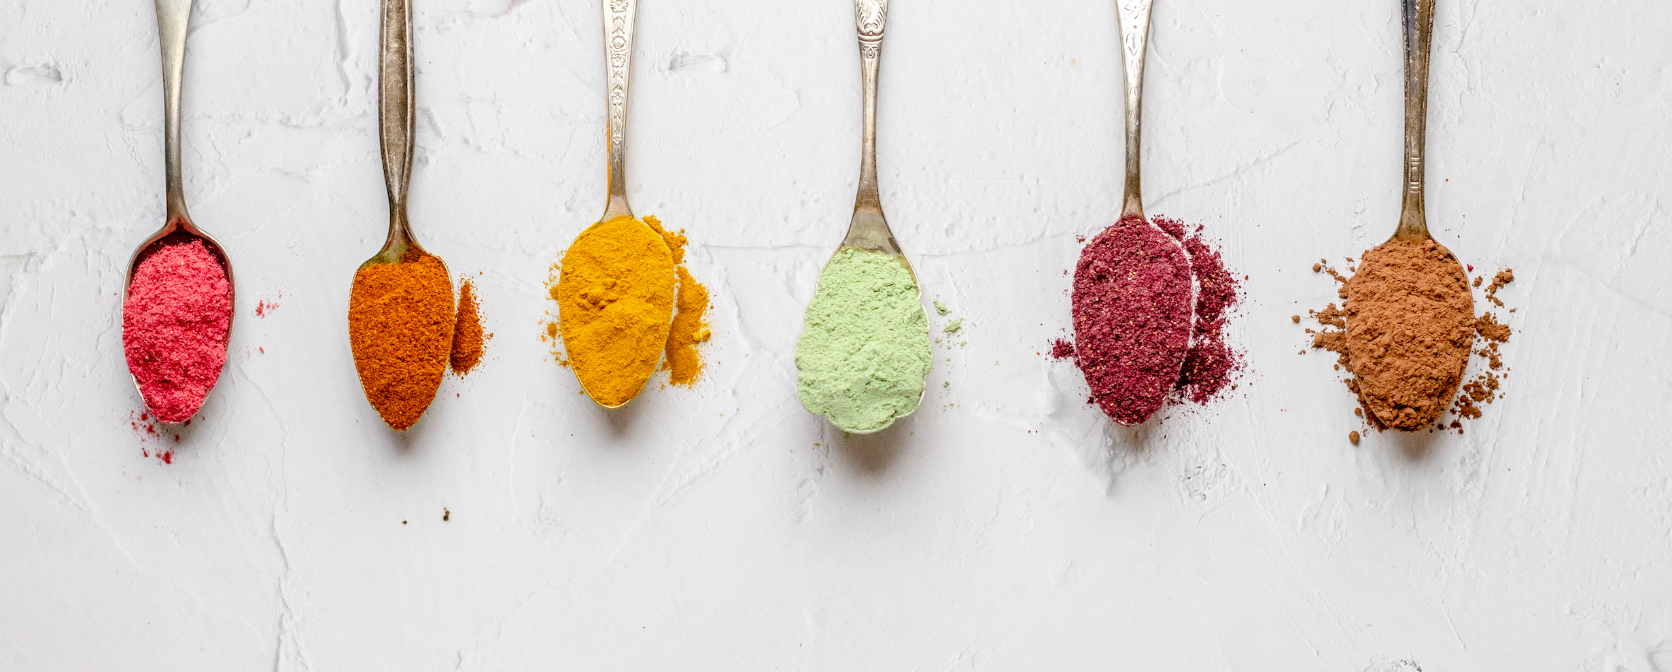 How to Make Natural Food Coloring